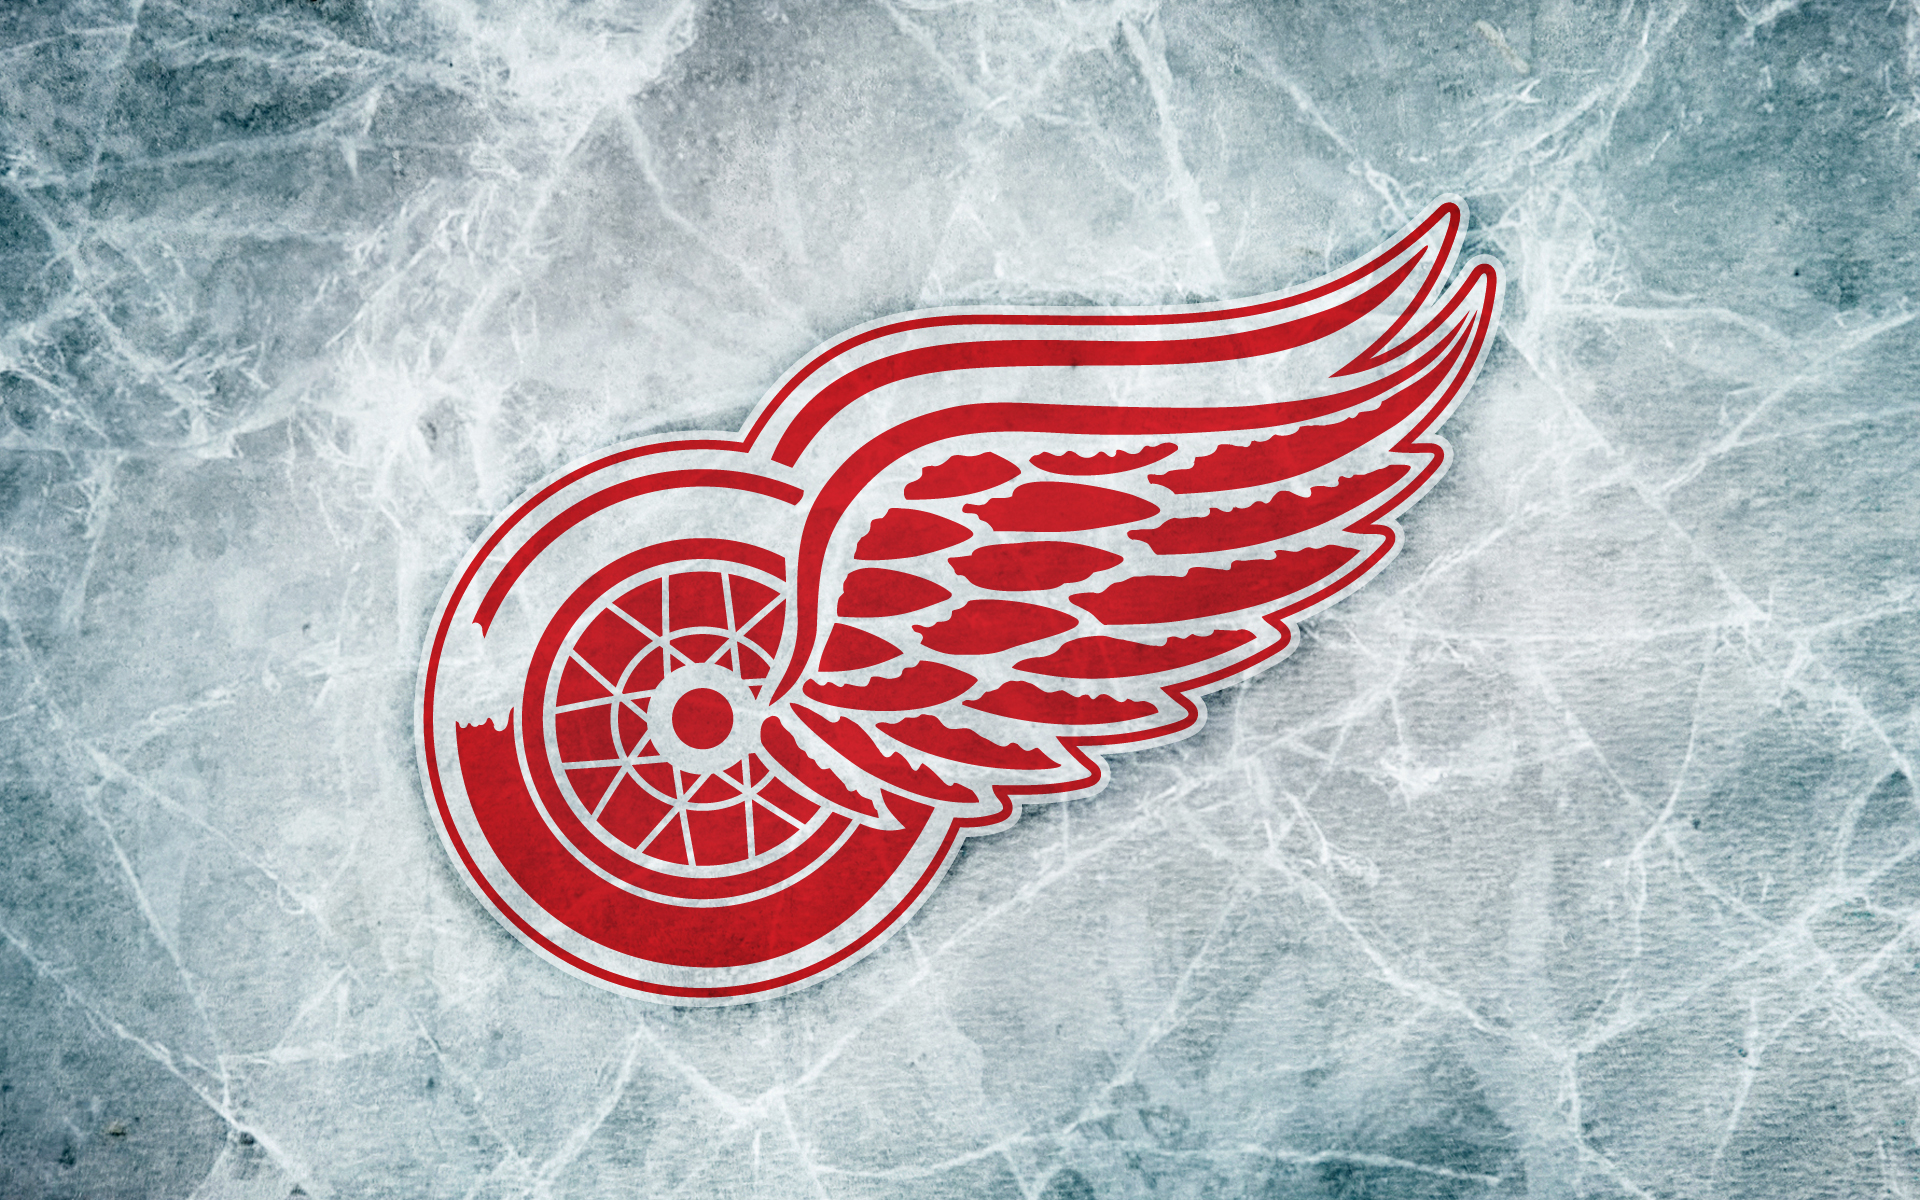 Detroit Red Wings Logo On Ice By Hawk Eyes X